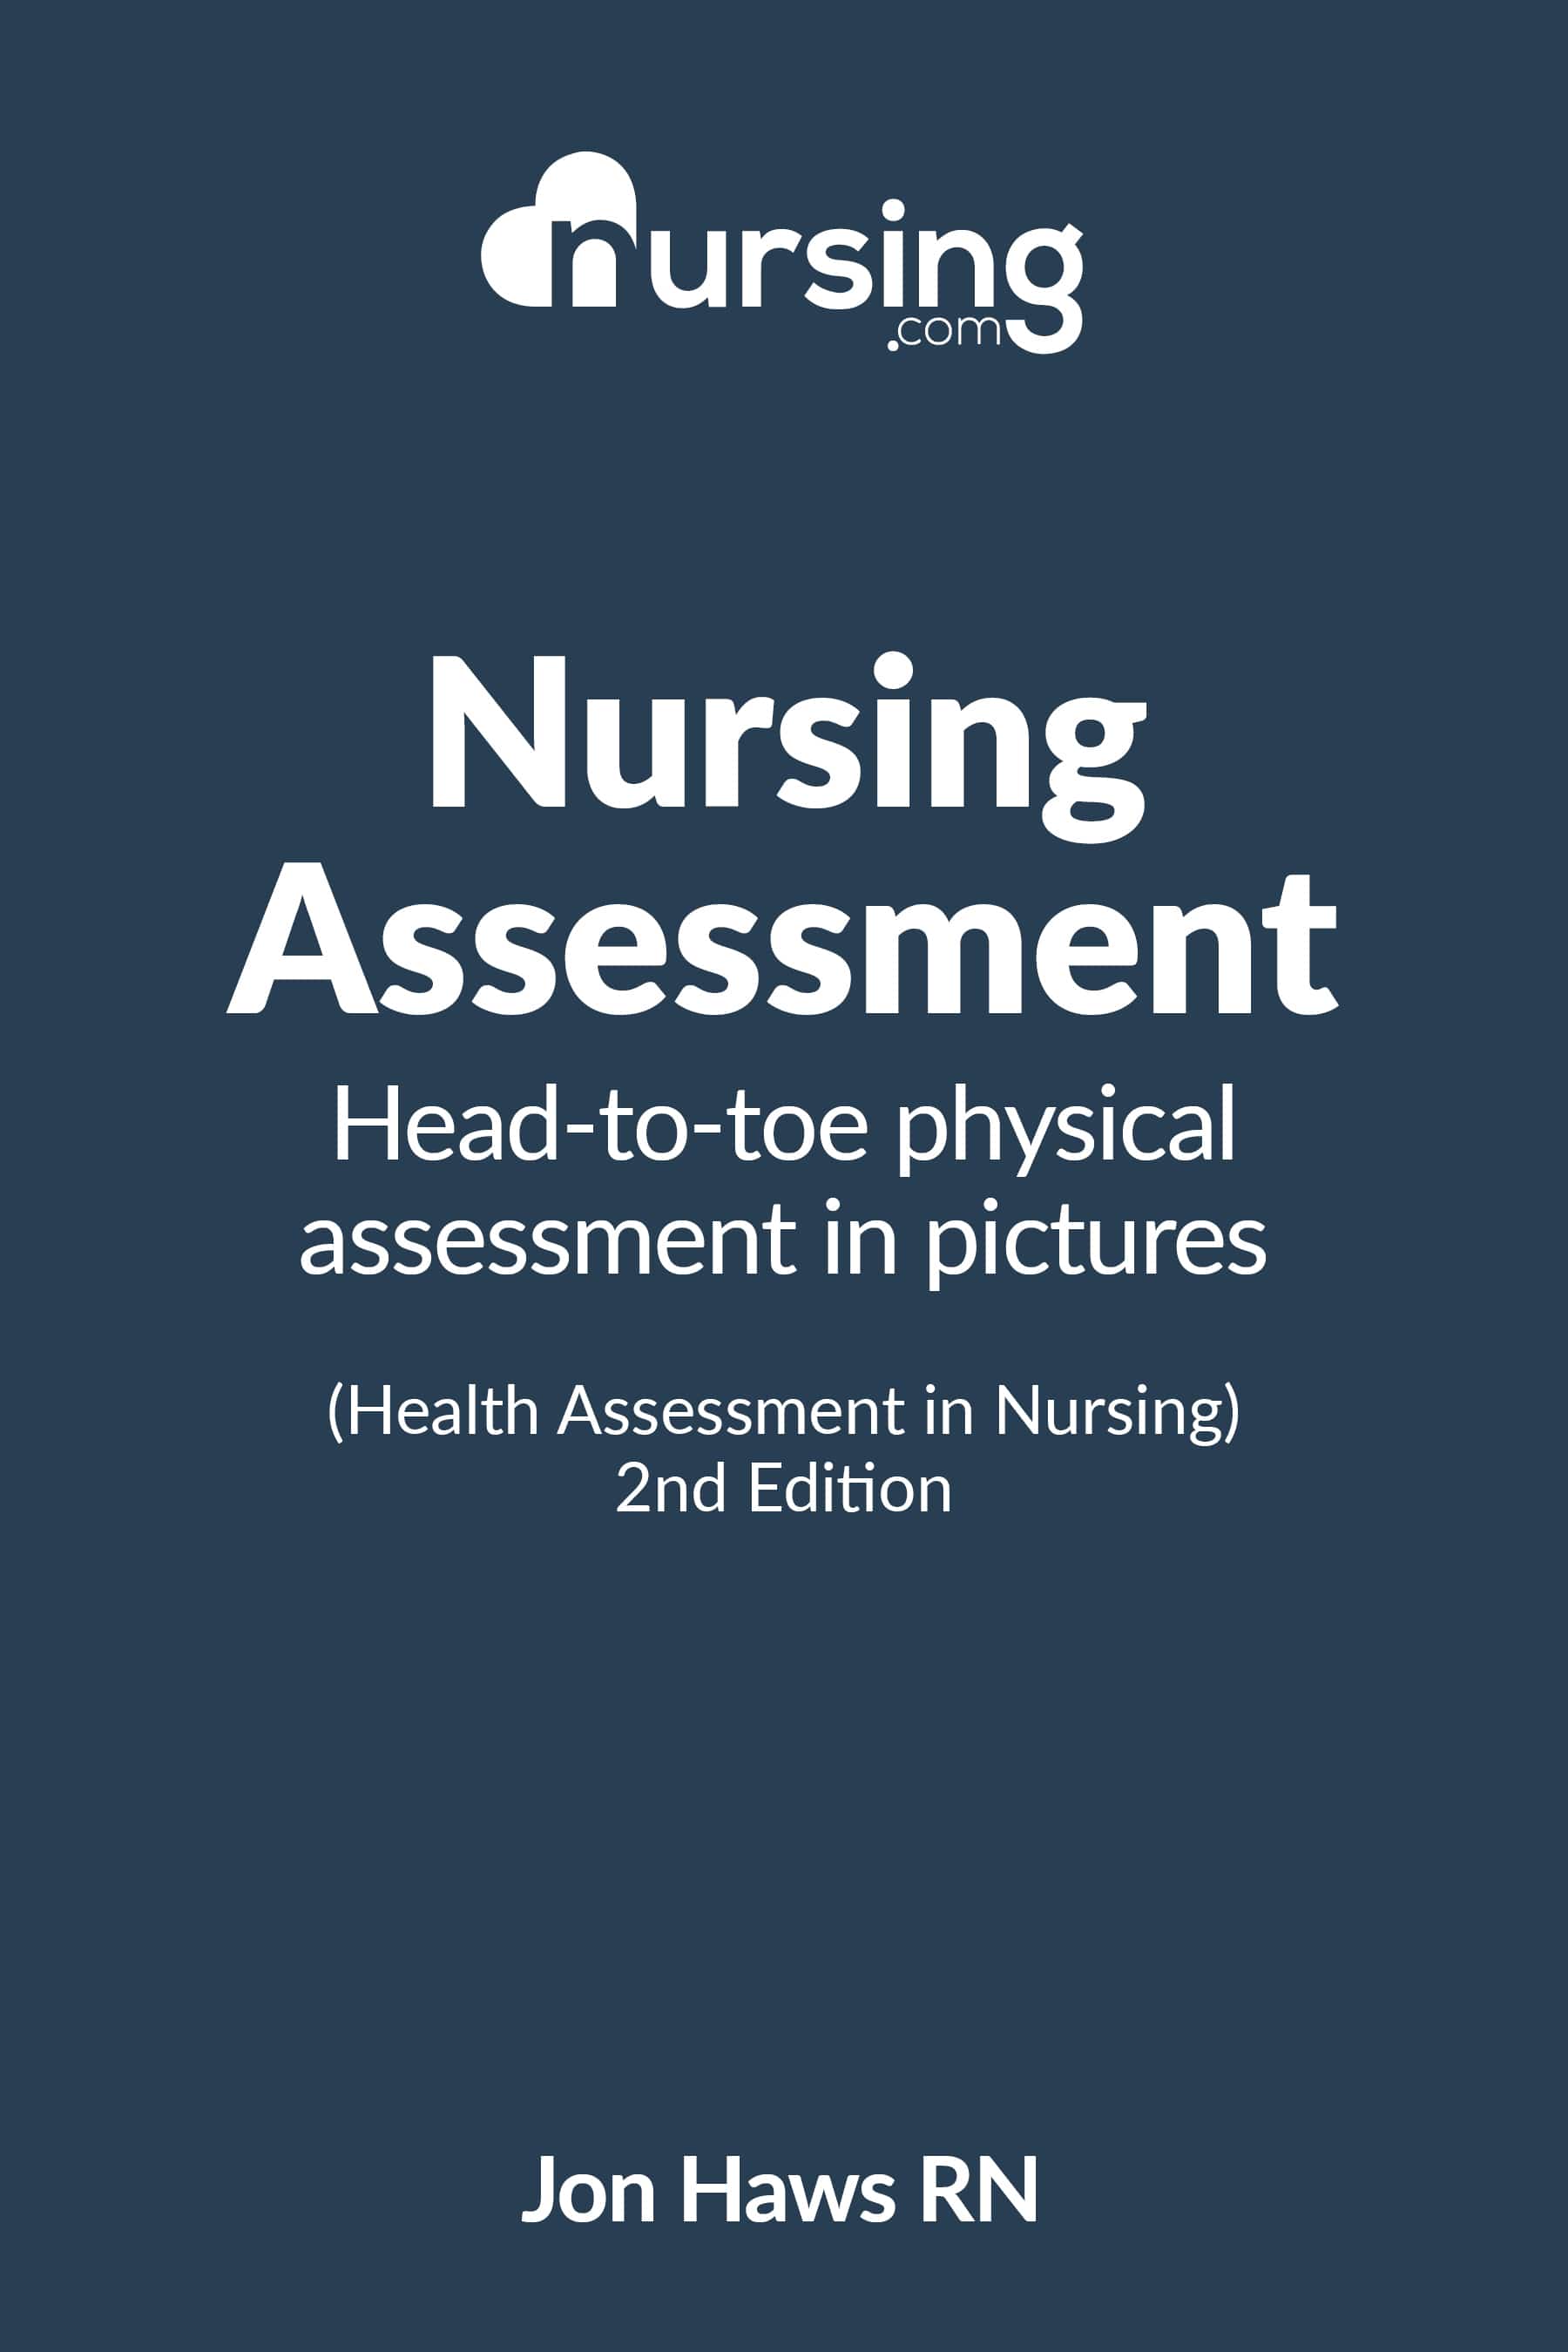 nursing assessment book cover